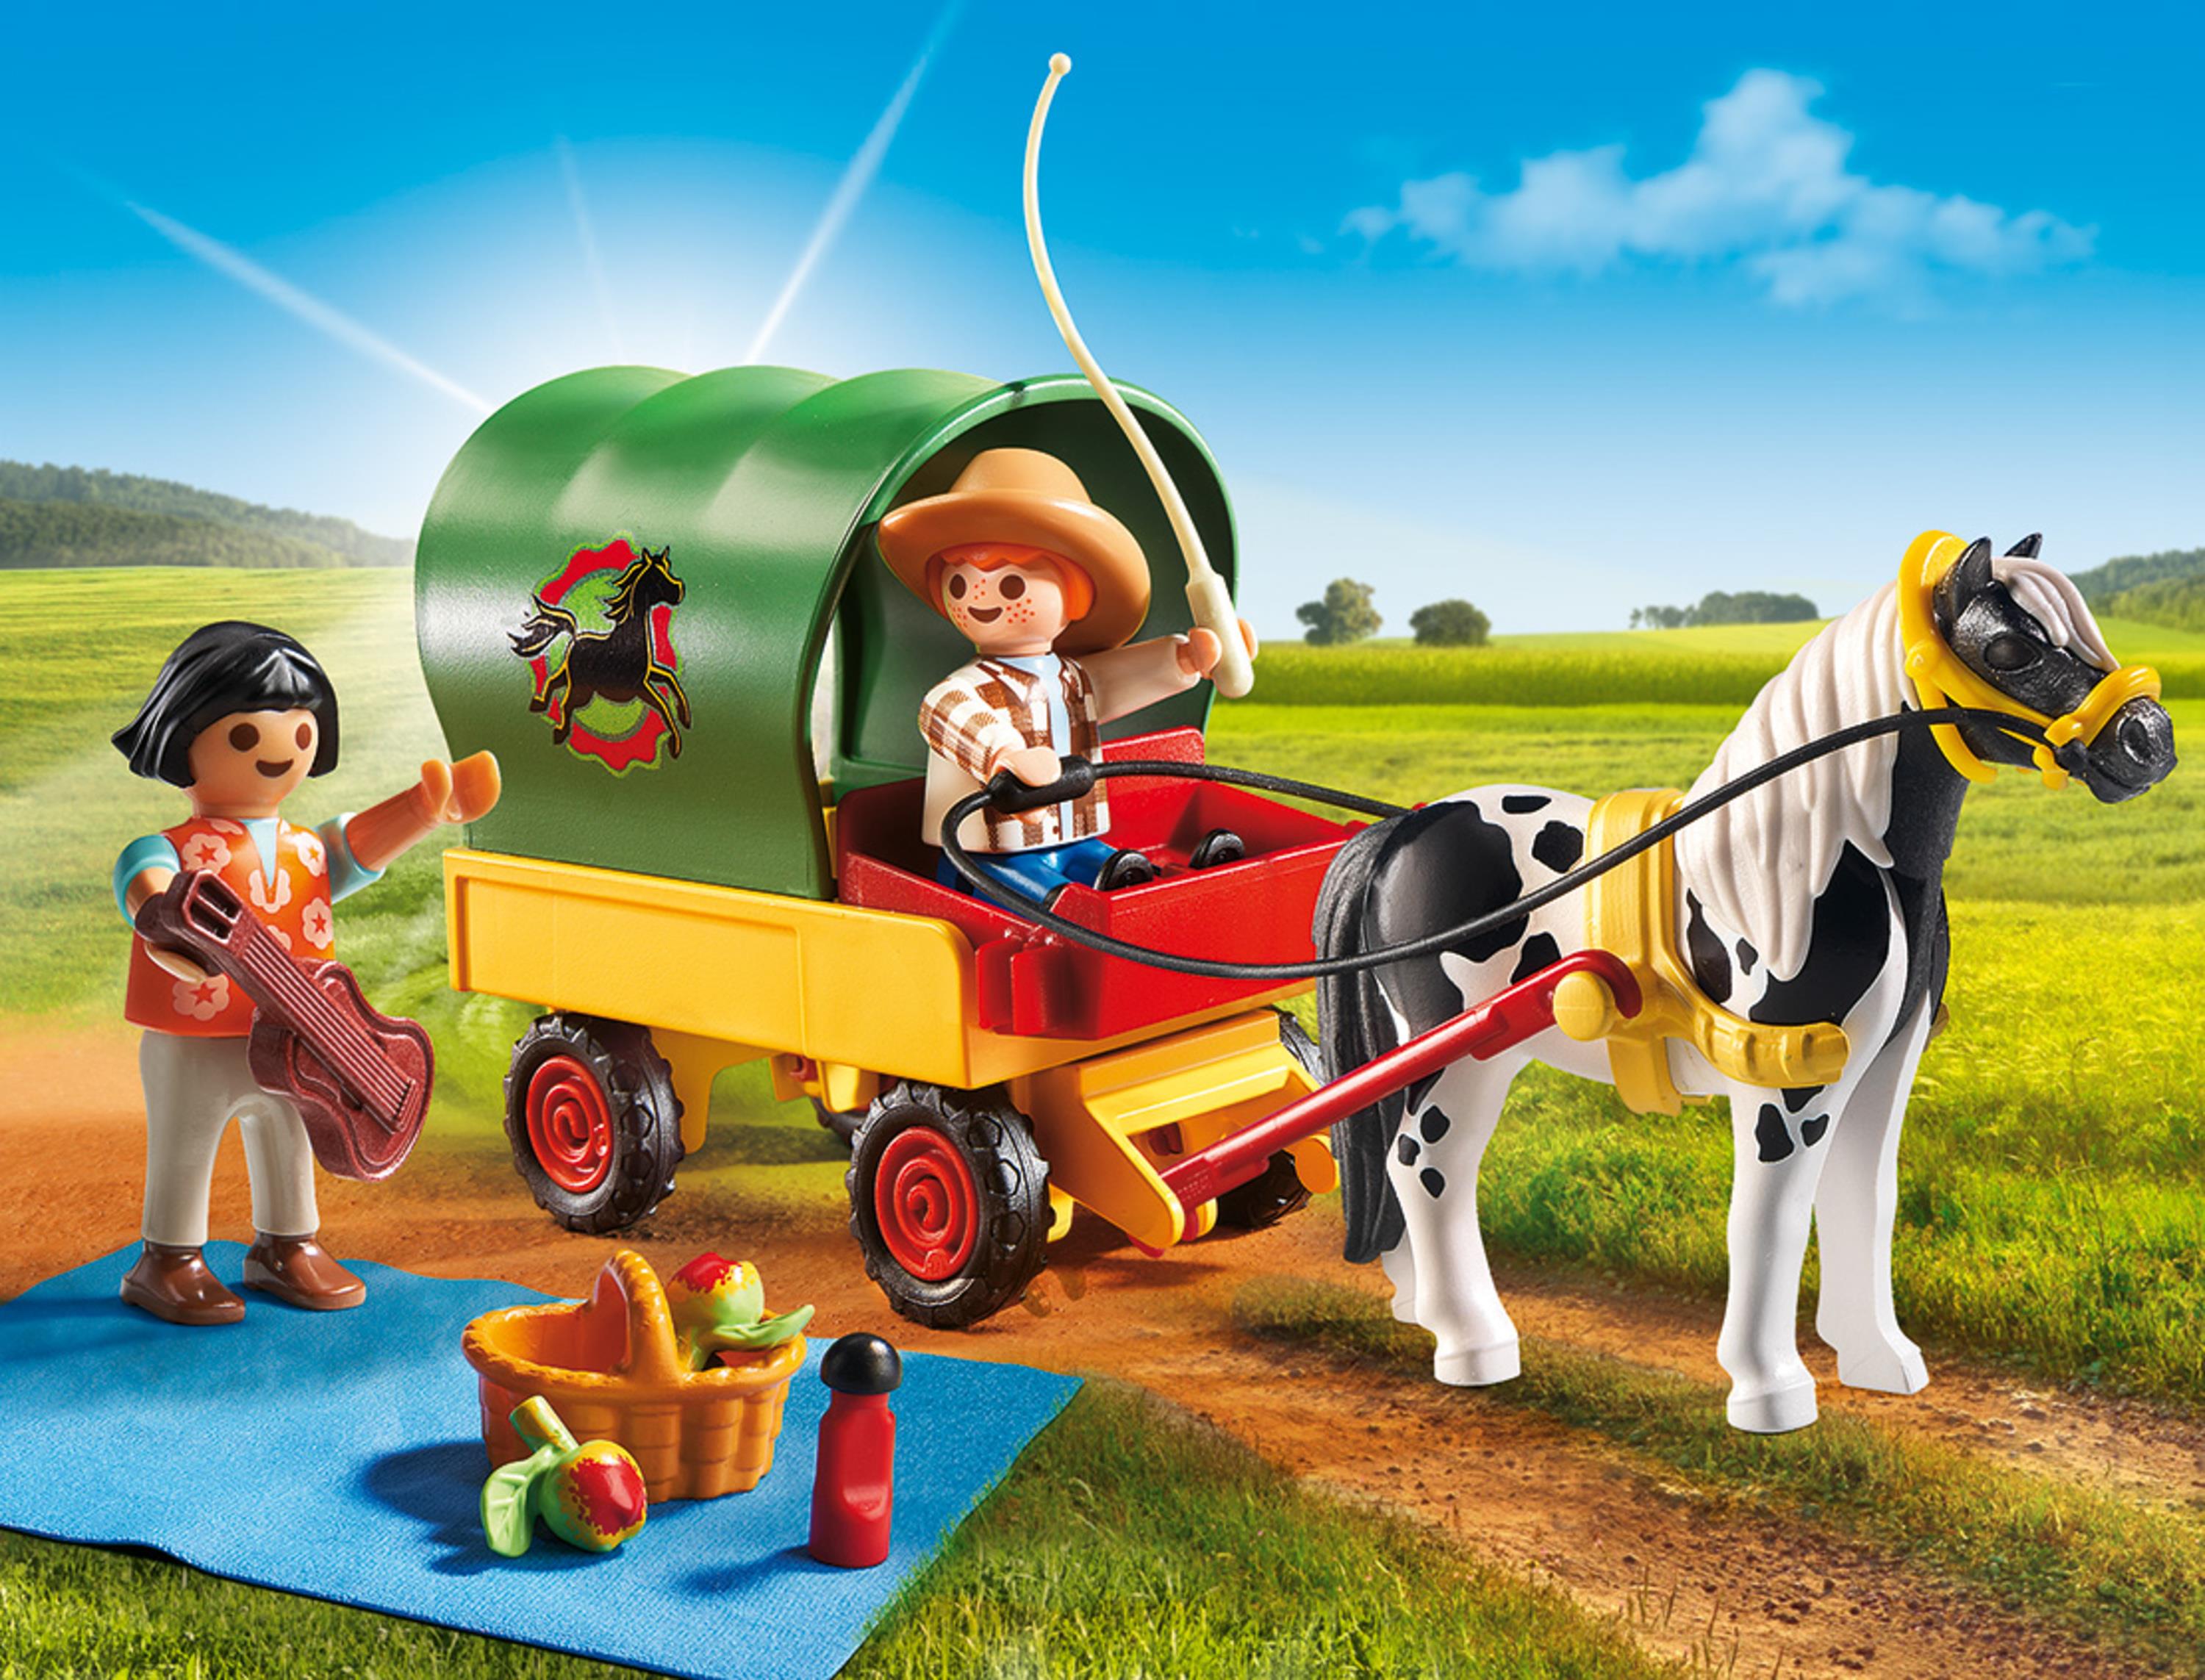 Playmobil Country 6948 - Mehrfarben - Playmobil - 4 Jahr(e) - 10 Jahr(e) - Junge/Mädchen (6948)